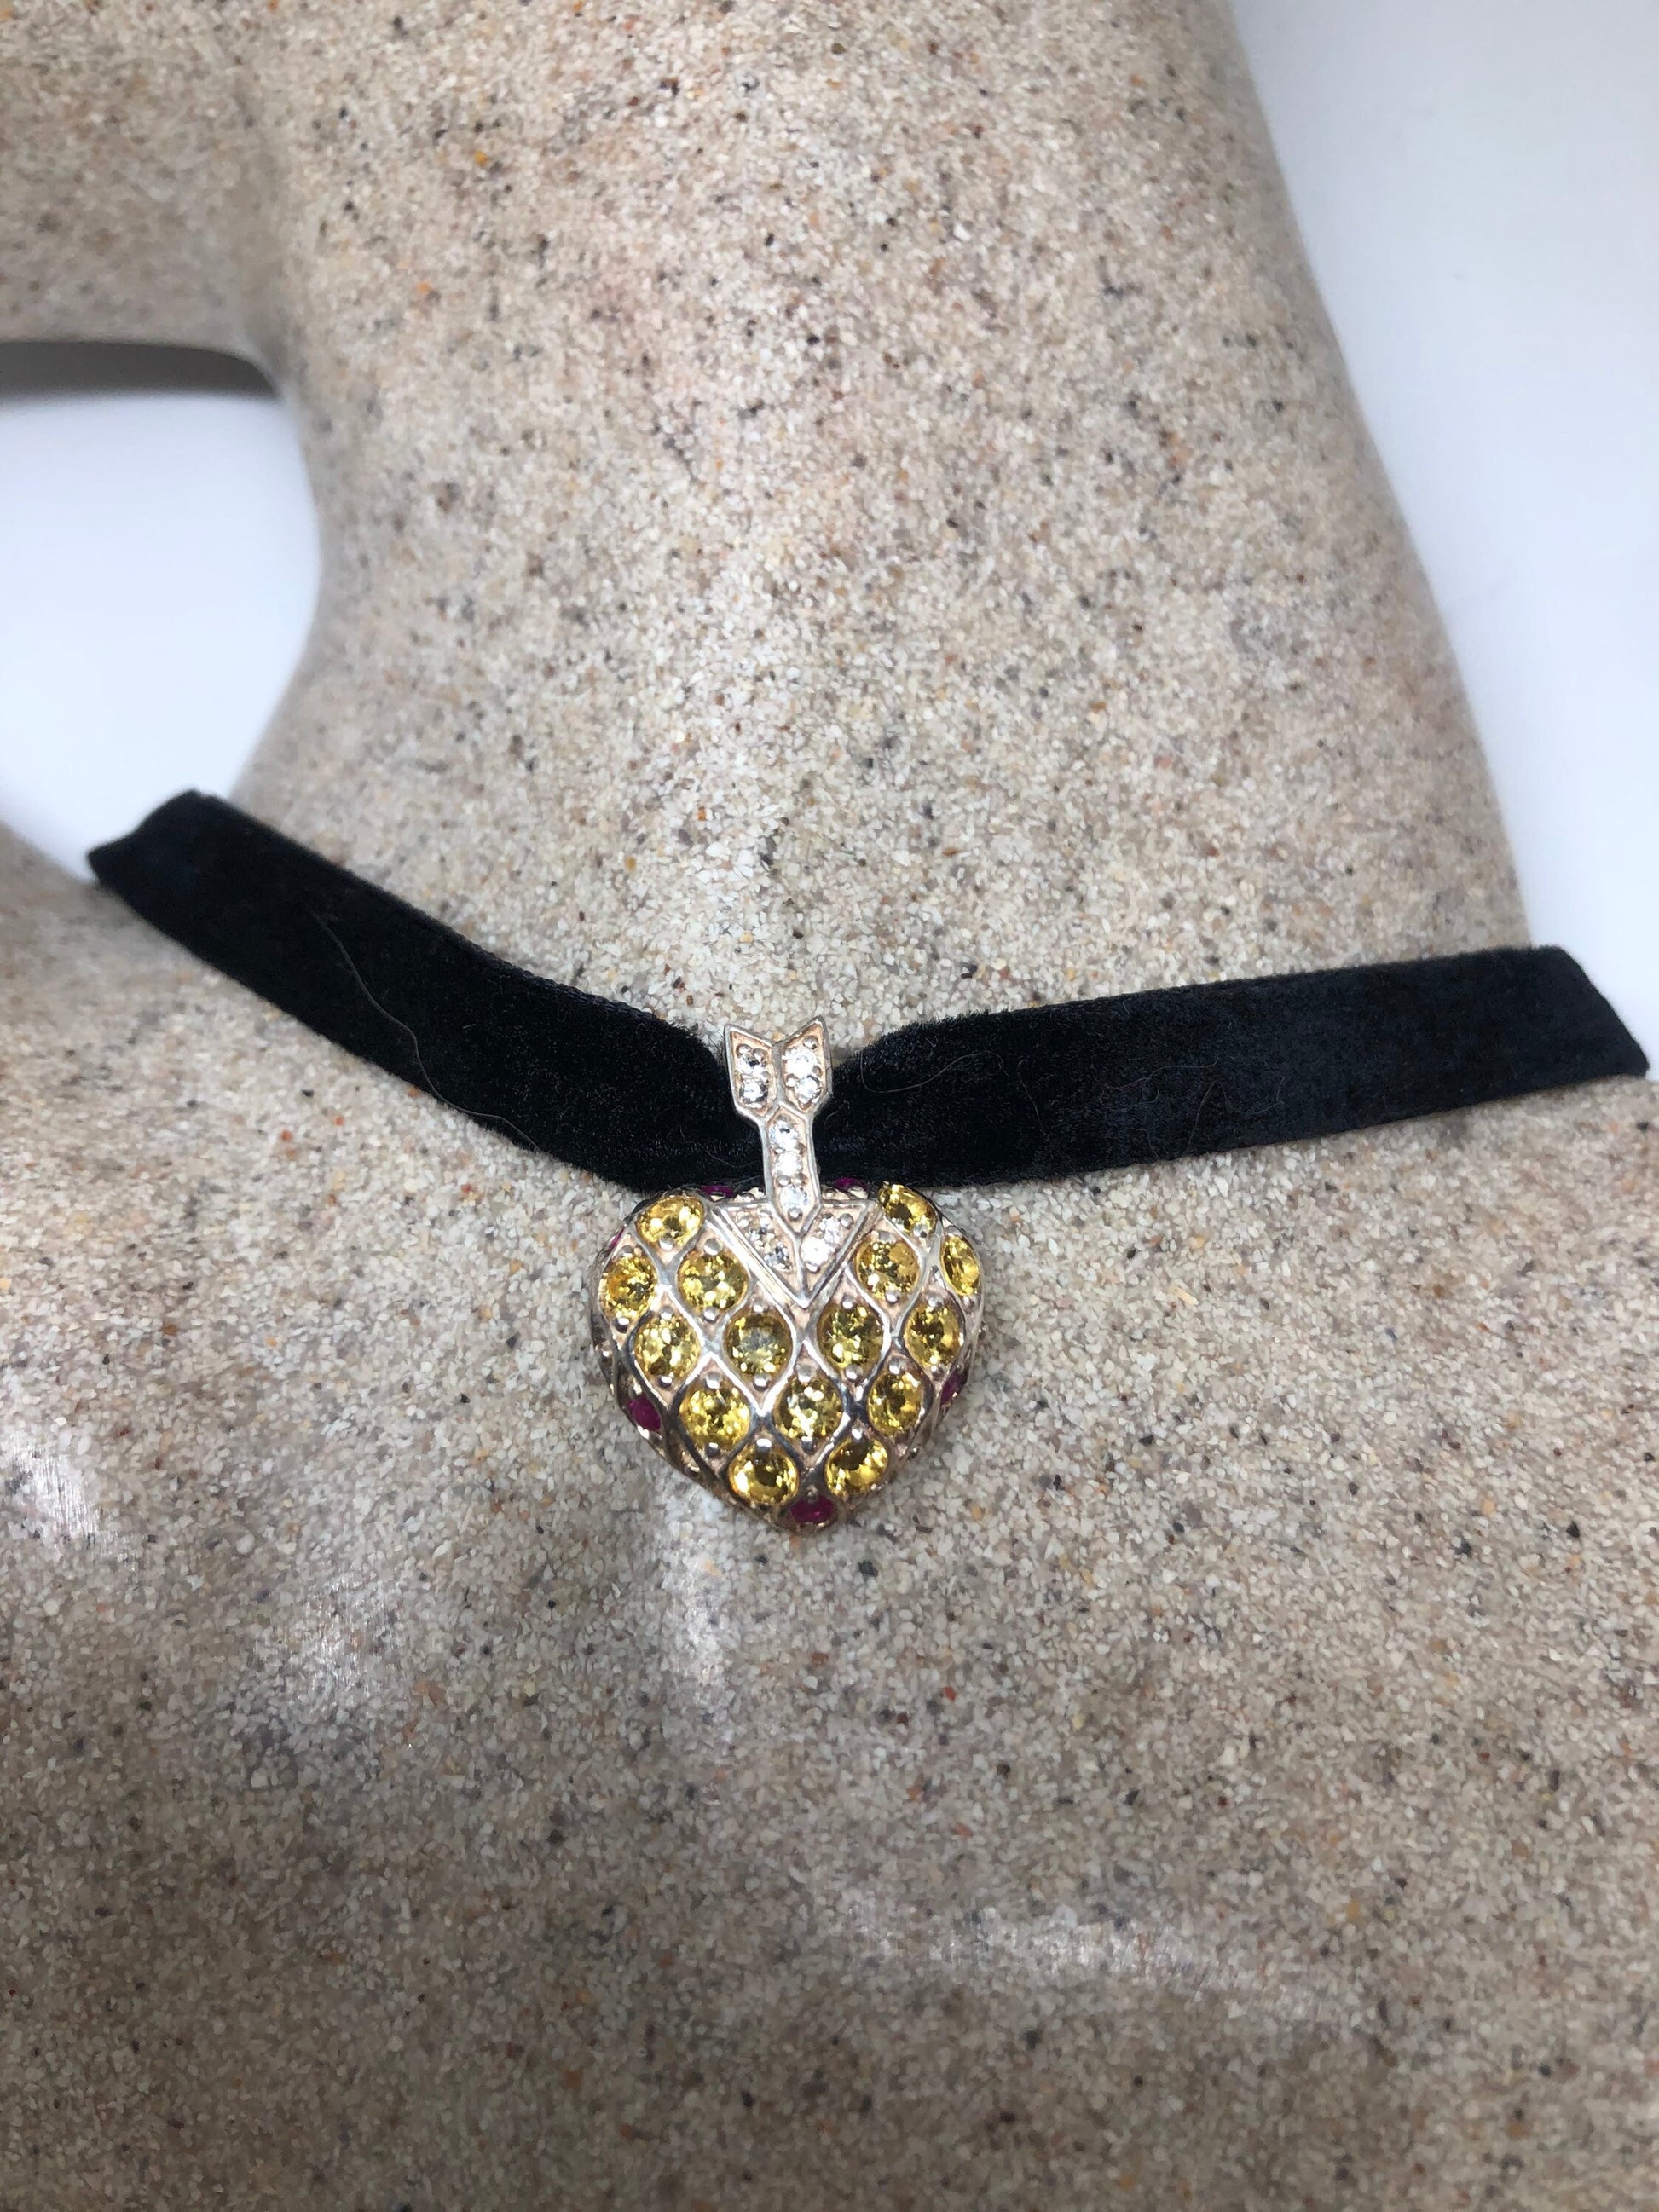 Vintage Golden Citrine Heart Pendant 925 Sterling Silver Choker Necklace